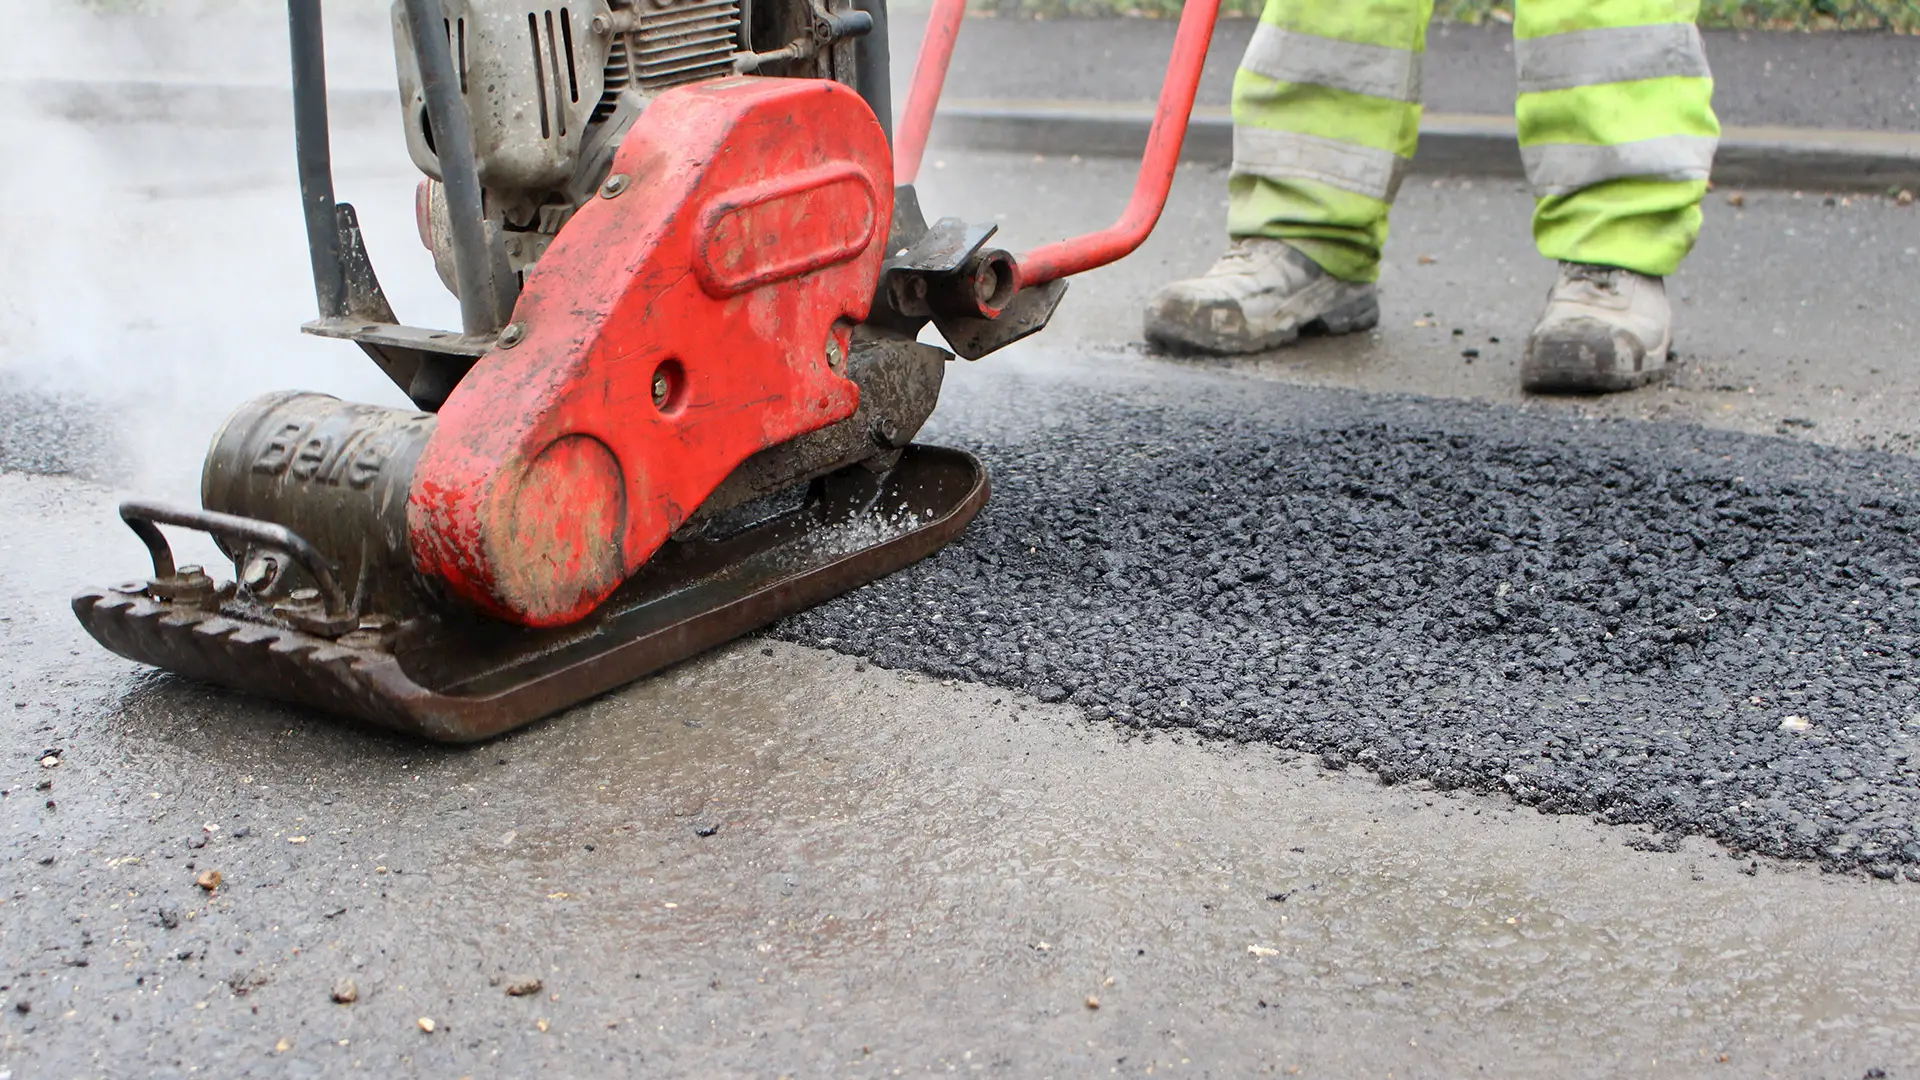 Experienced pothole repair contractors in Wellingborough